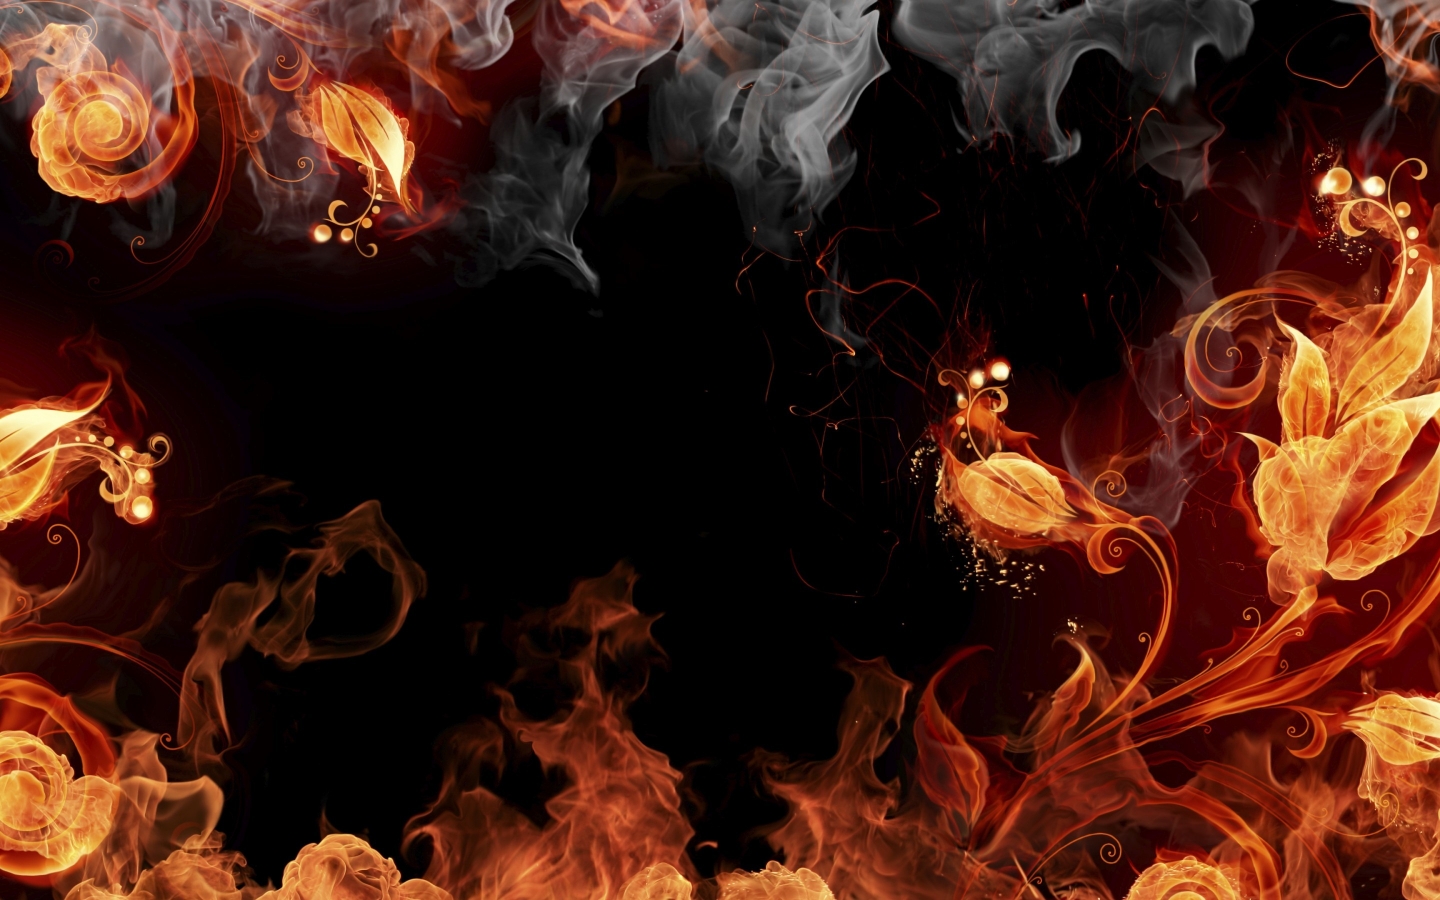 Fire Abstract Art for 1440 x 900 widescreen resolution